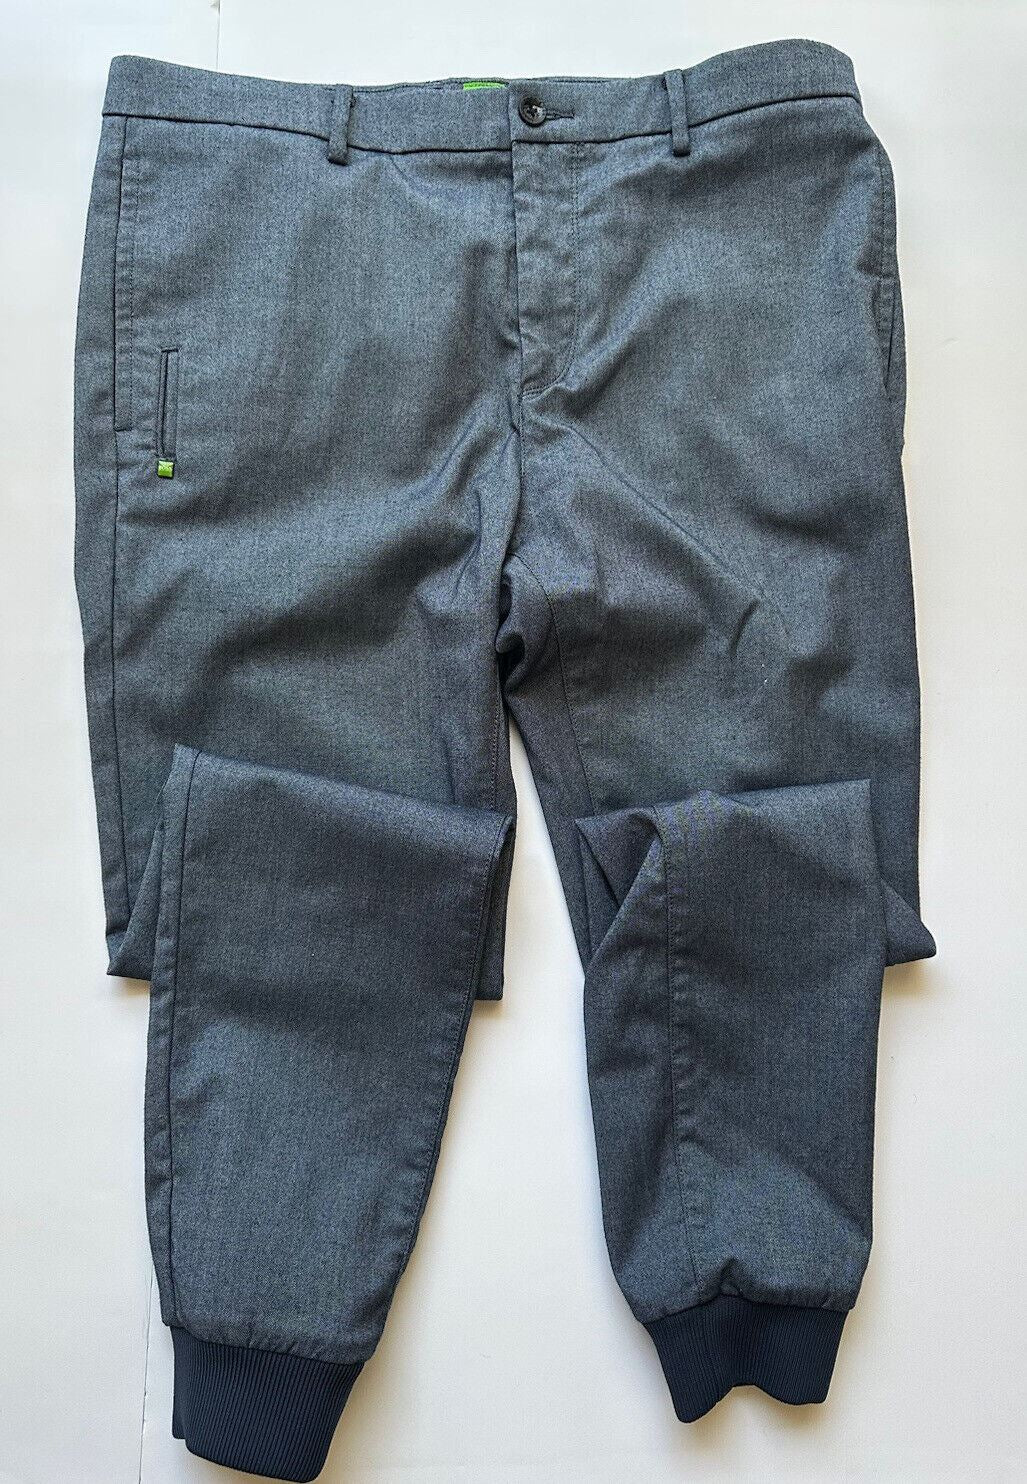 Boss Hugo Boss Blue Casual Slim Fit Pants 34 US (50 Euro - 36" Measured)